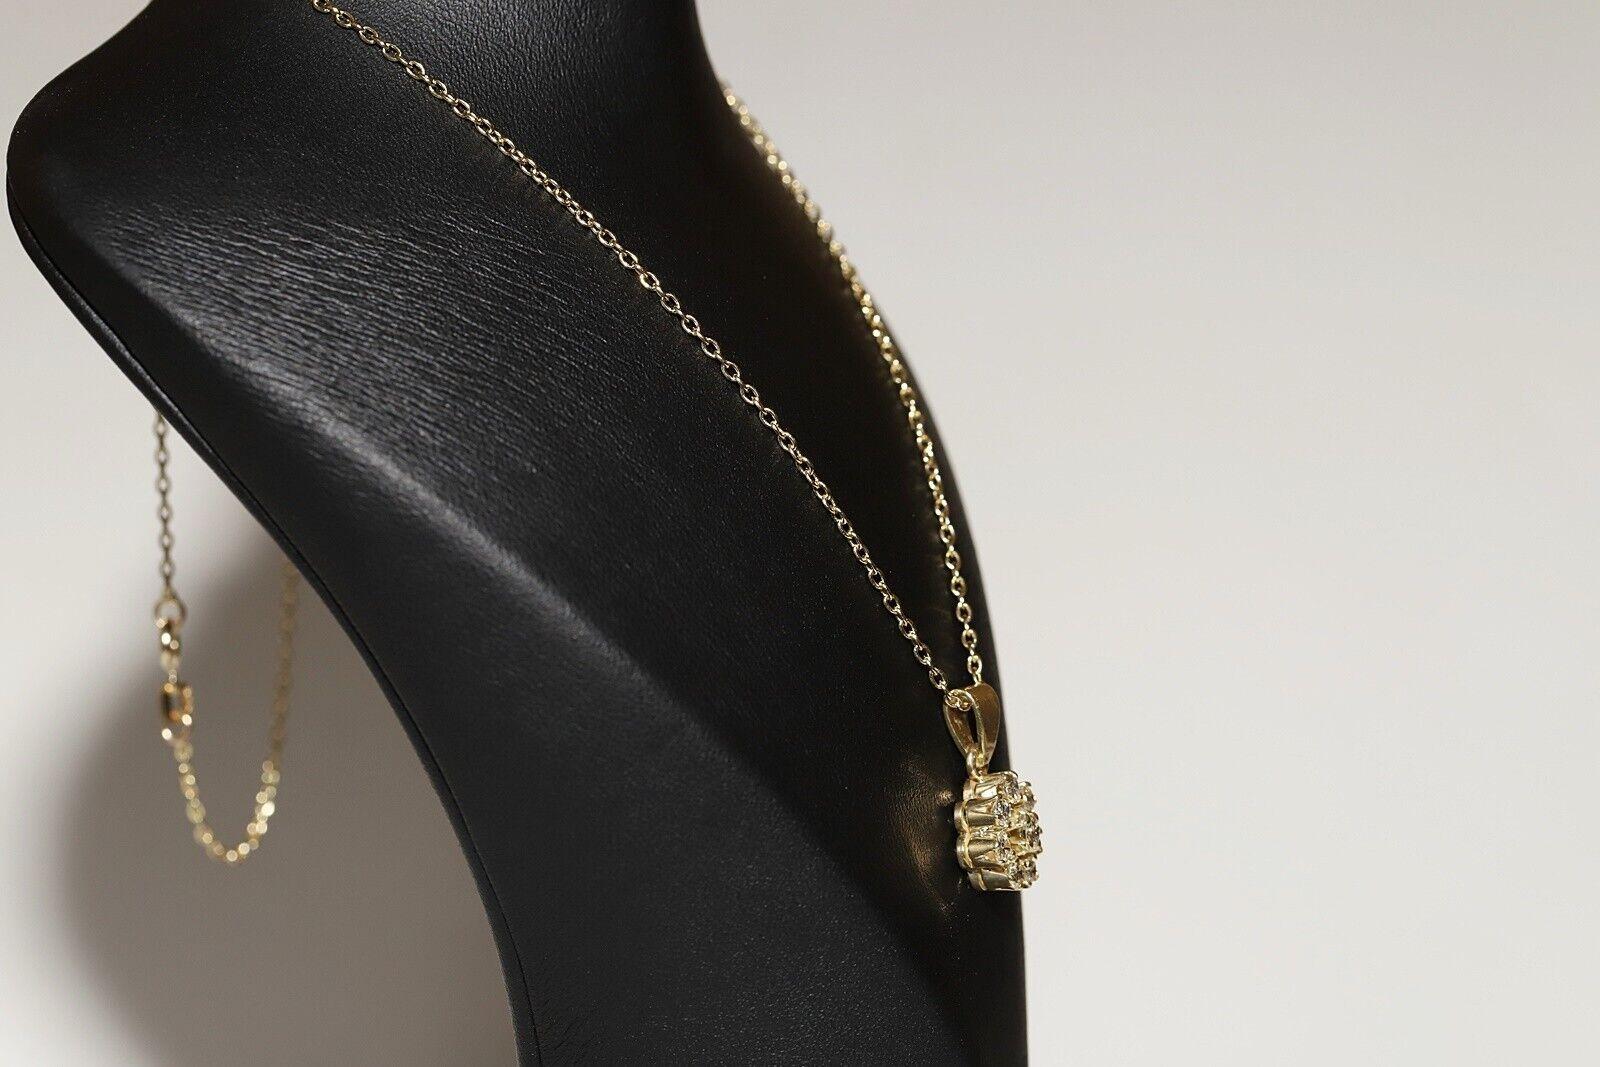 Retro Vintage Circa 1980s 14k Gold Natural Diamond Decorated Pendant Necklace For Sale